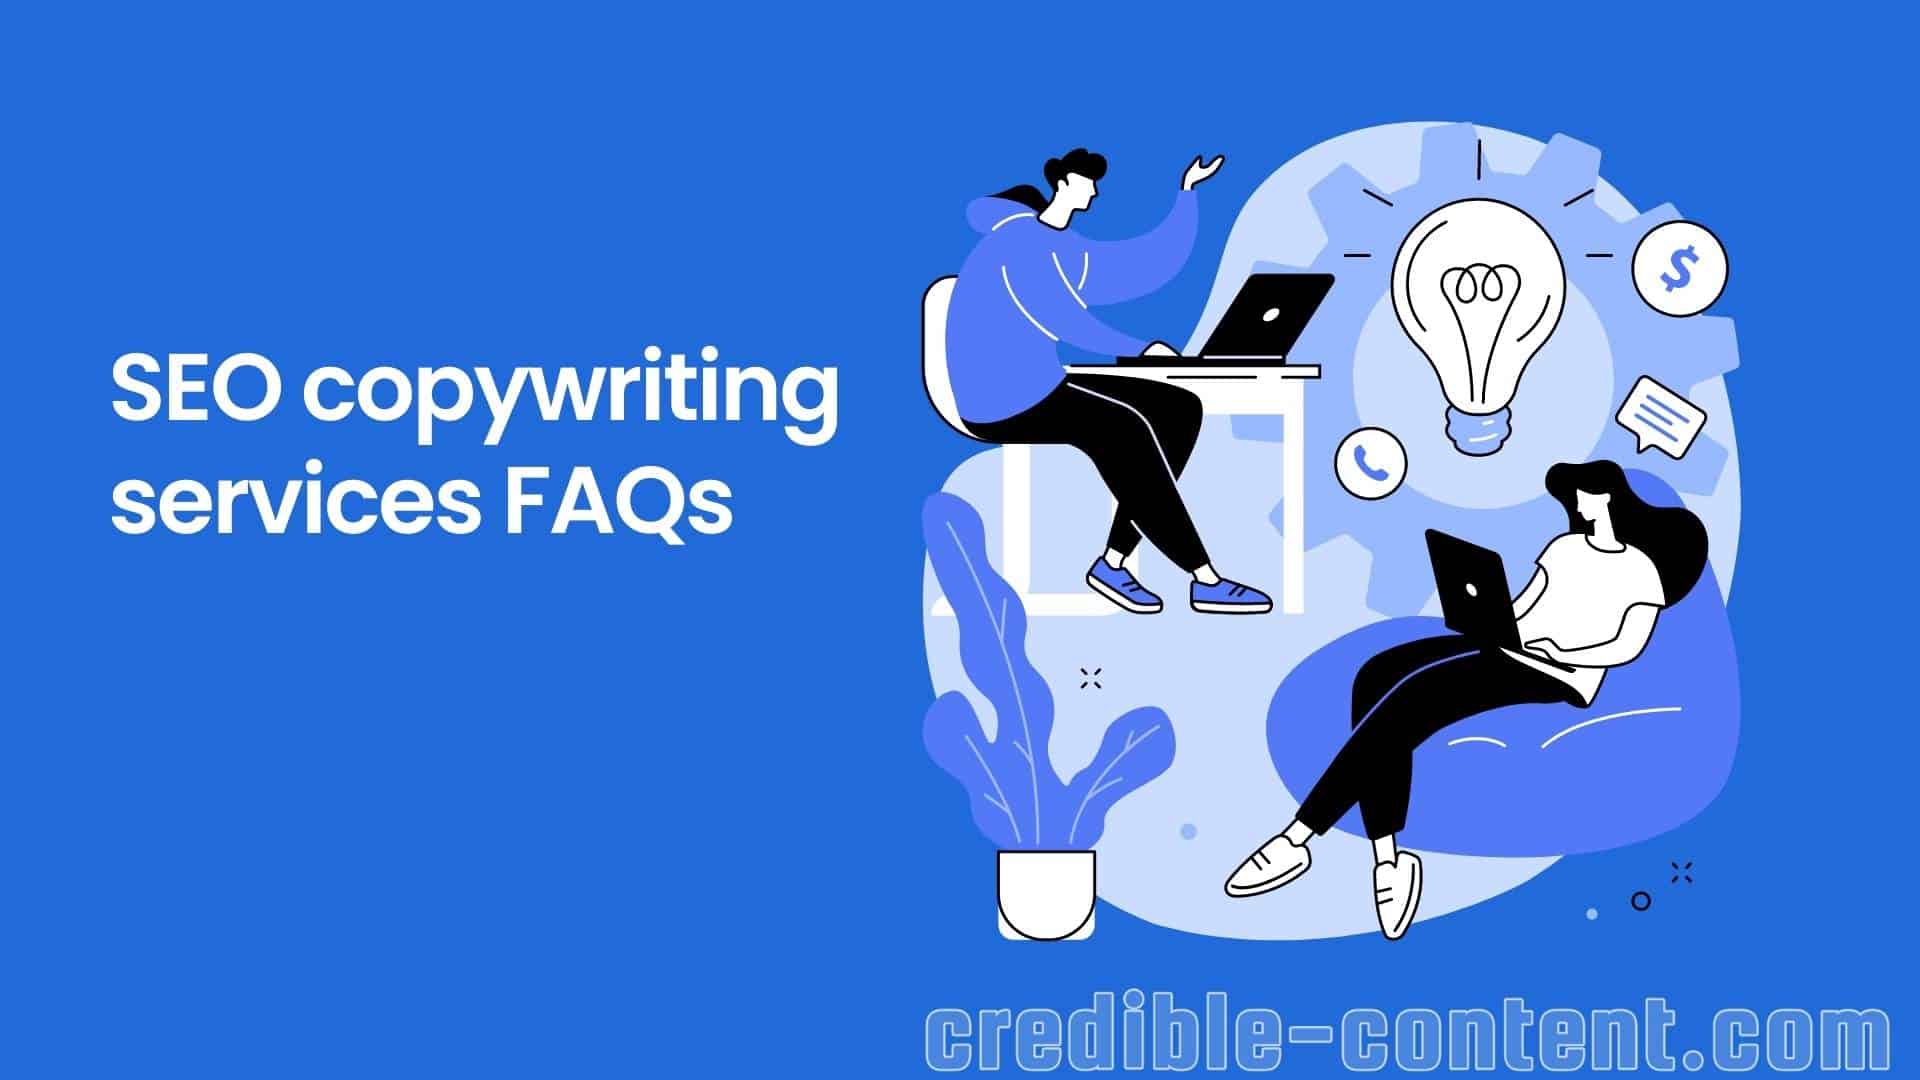 SEO copywriting services FAQs